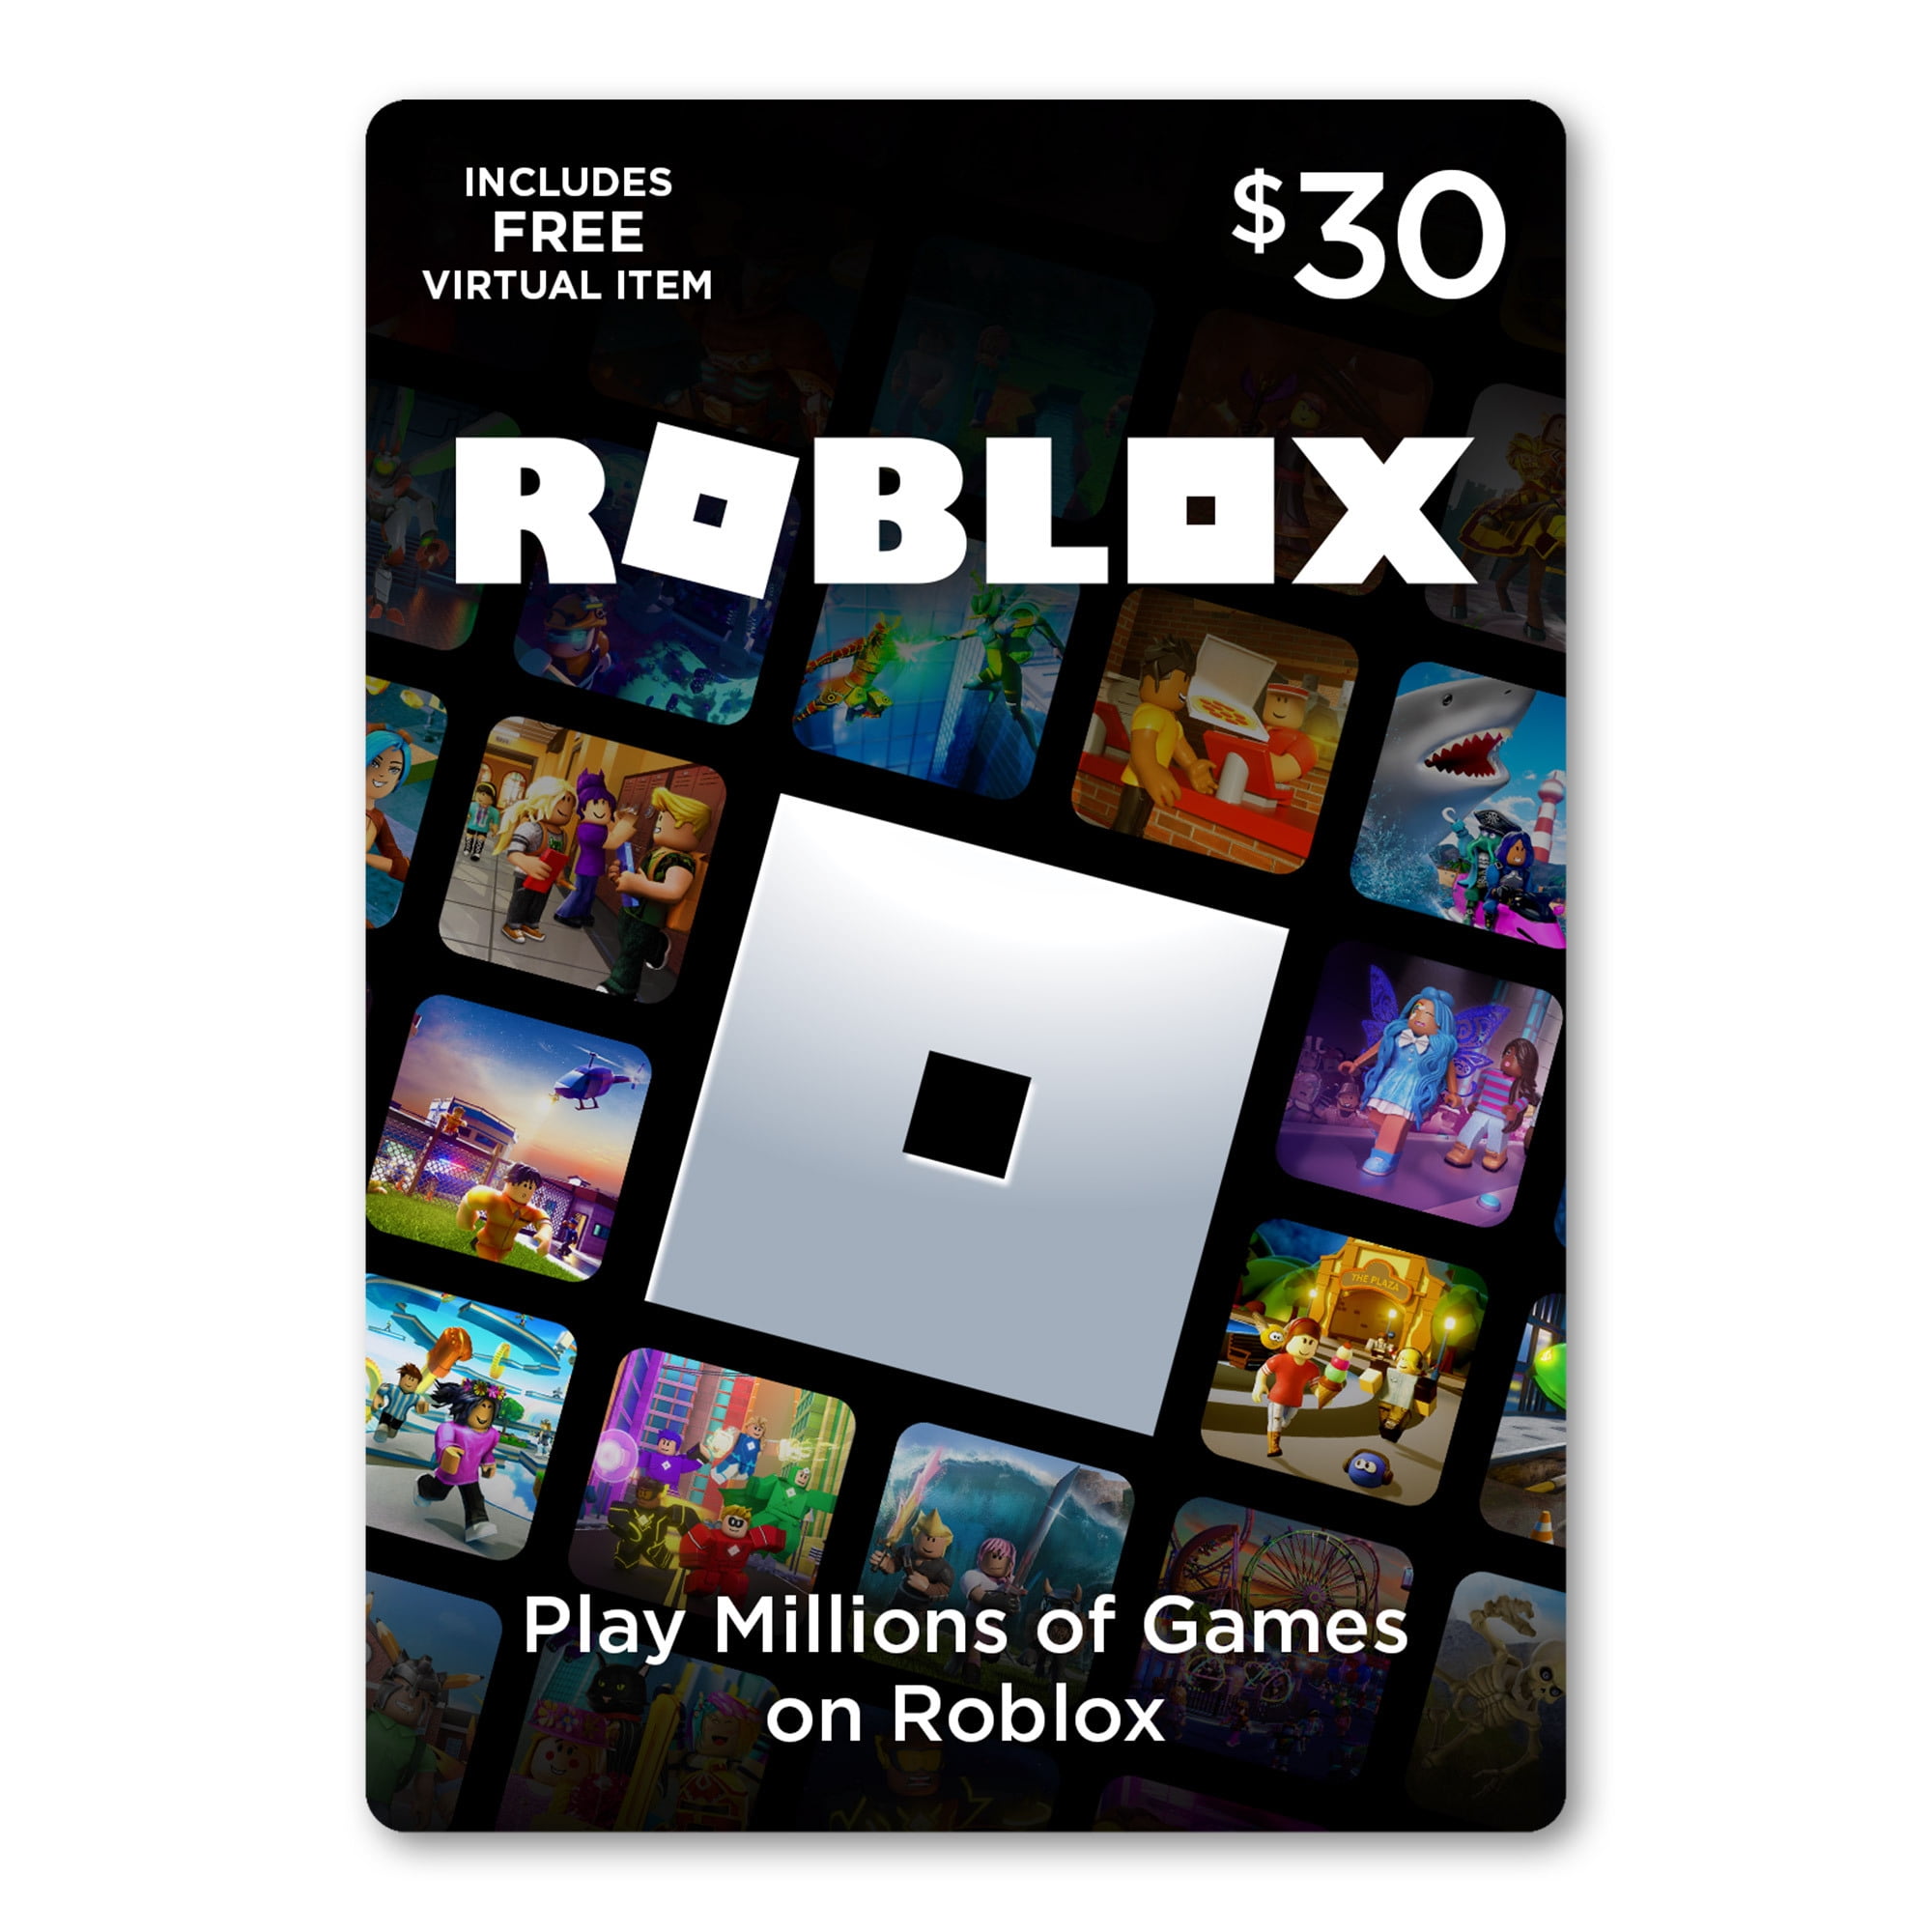 Roblox 30 Digital Gift Card Includes Exclusive Virtual Item Digital Download Walmart Com Walmart Com - roblox hair under 30 robux